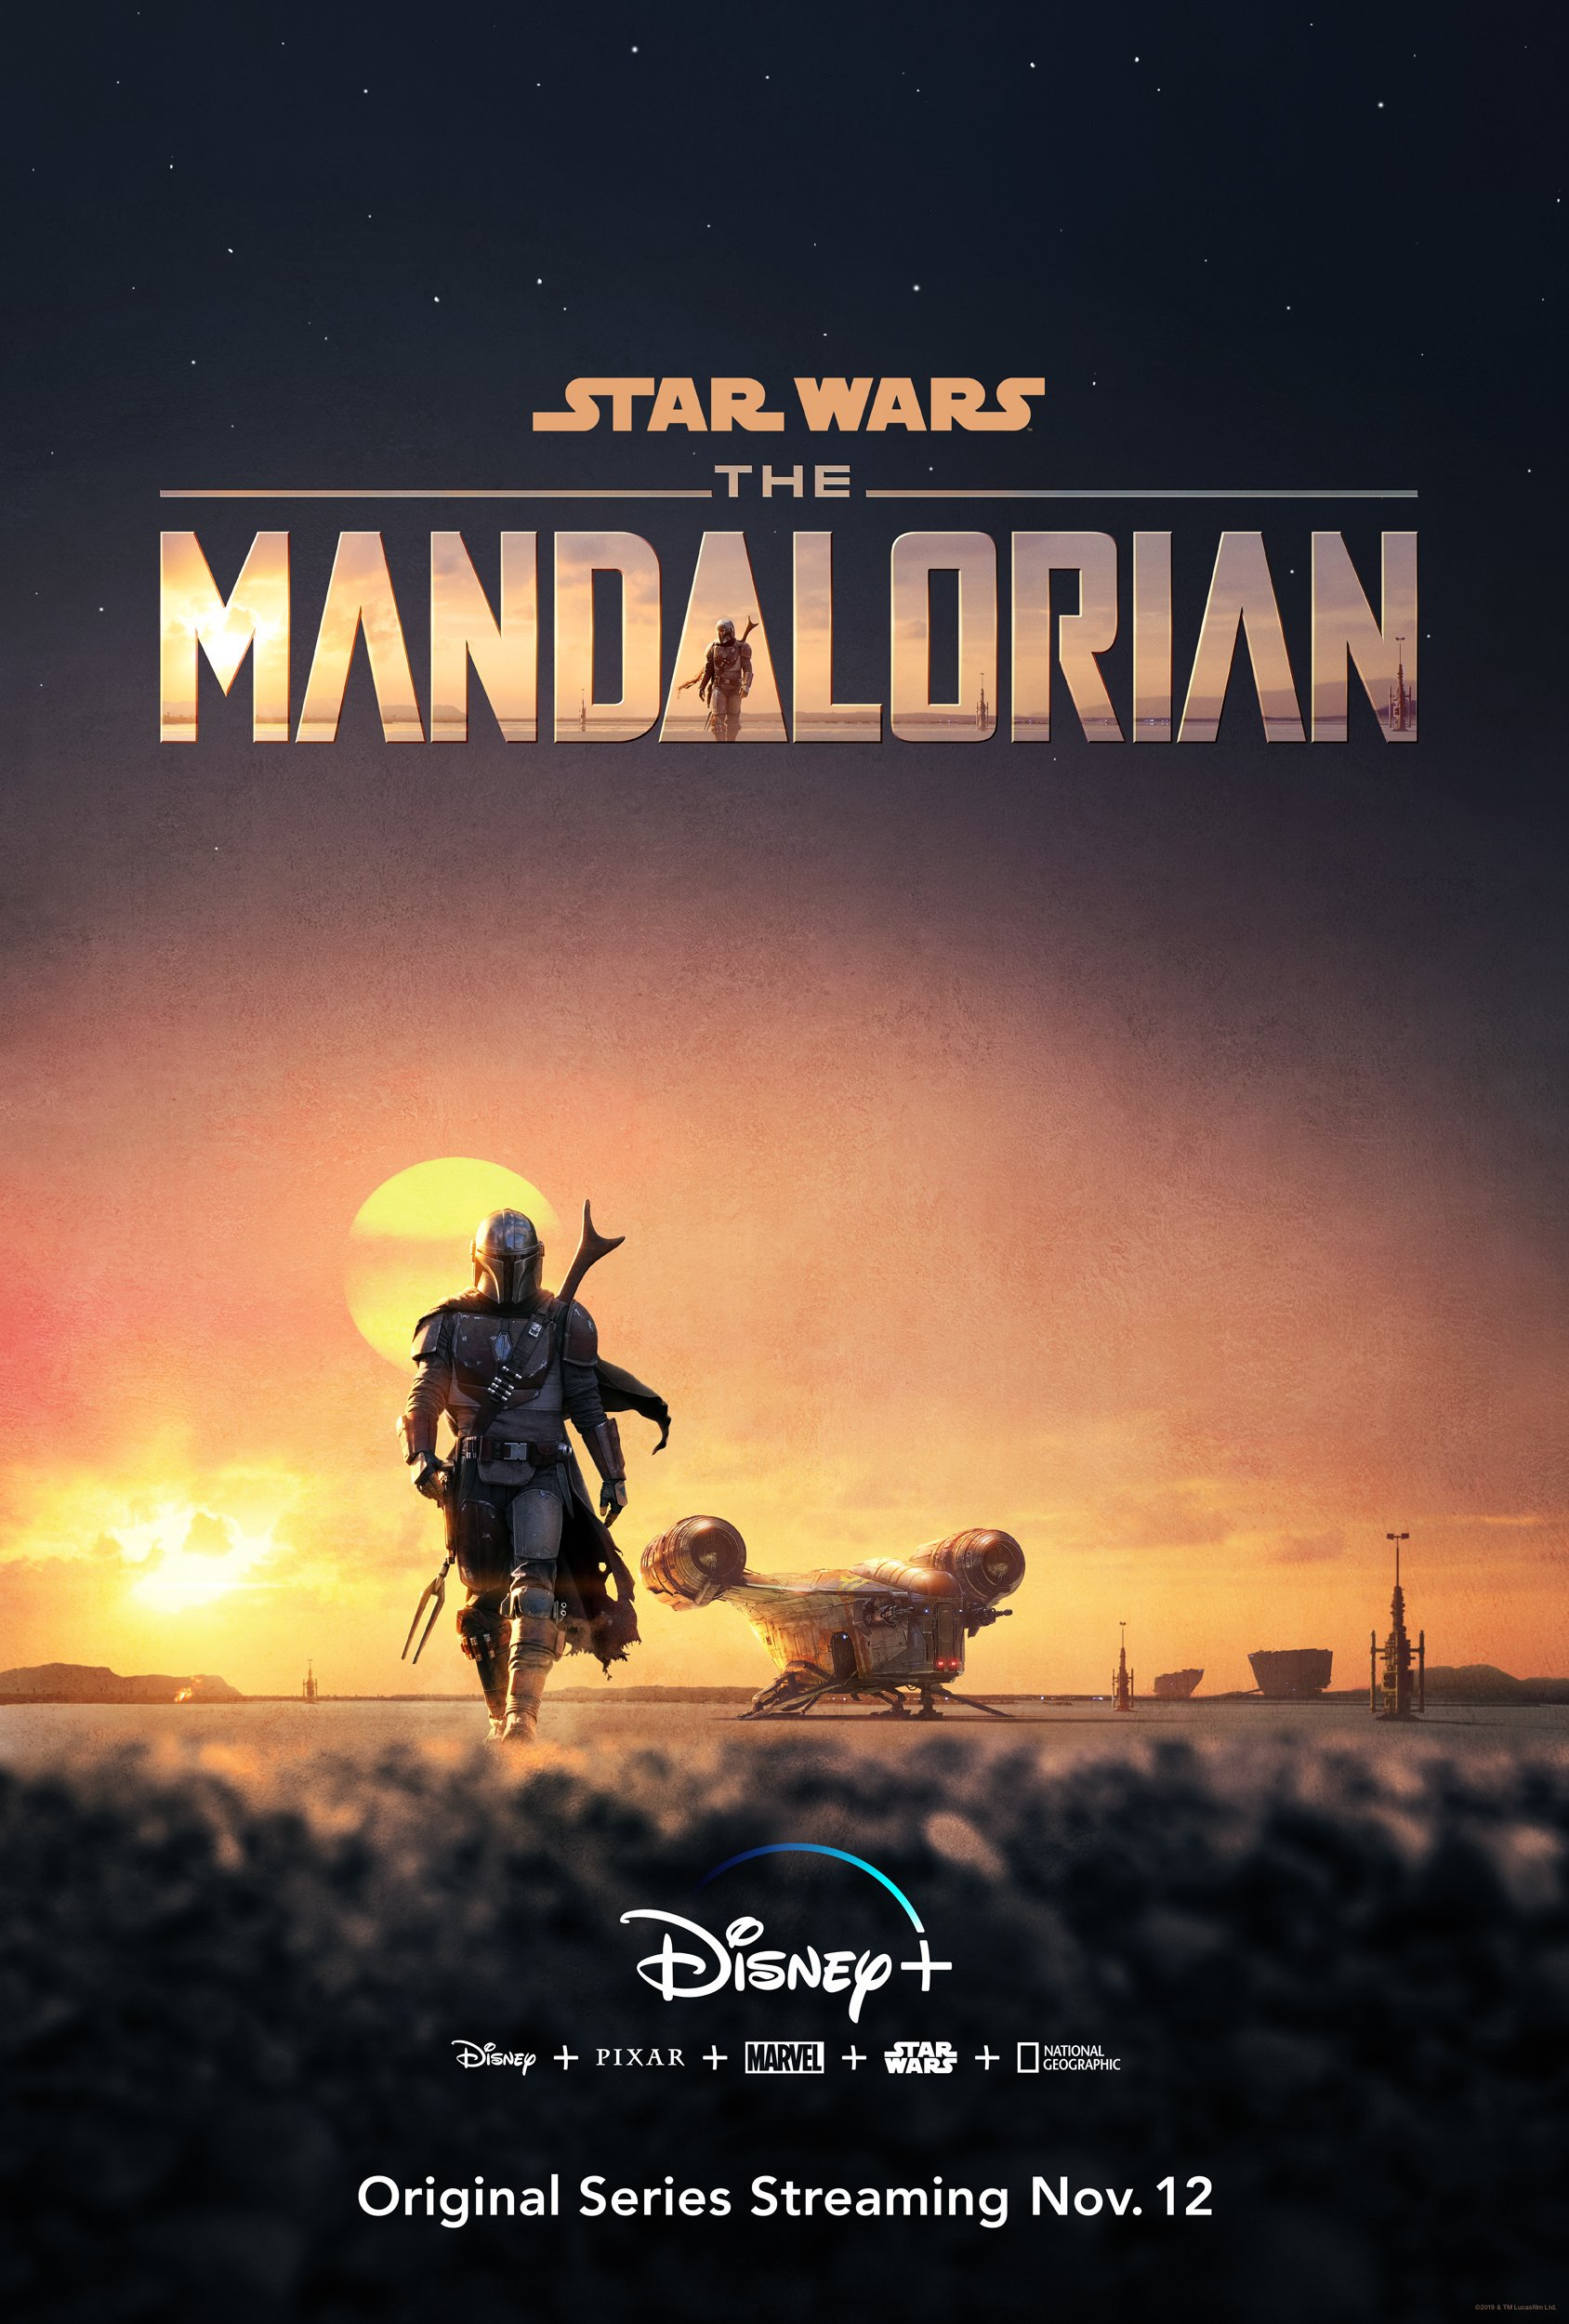 Disney Mandalorian 2019 Wallpapers